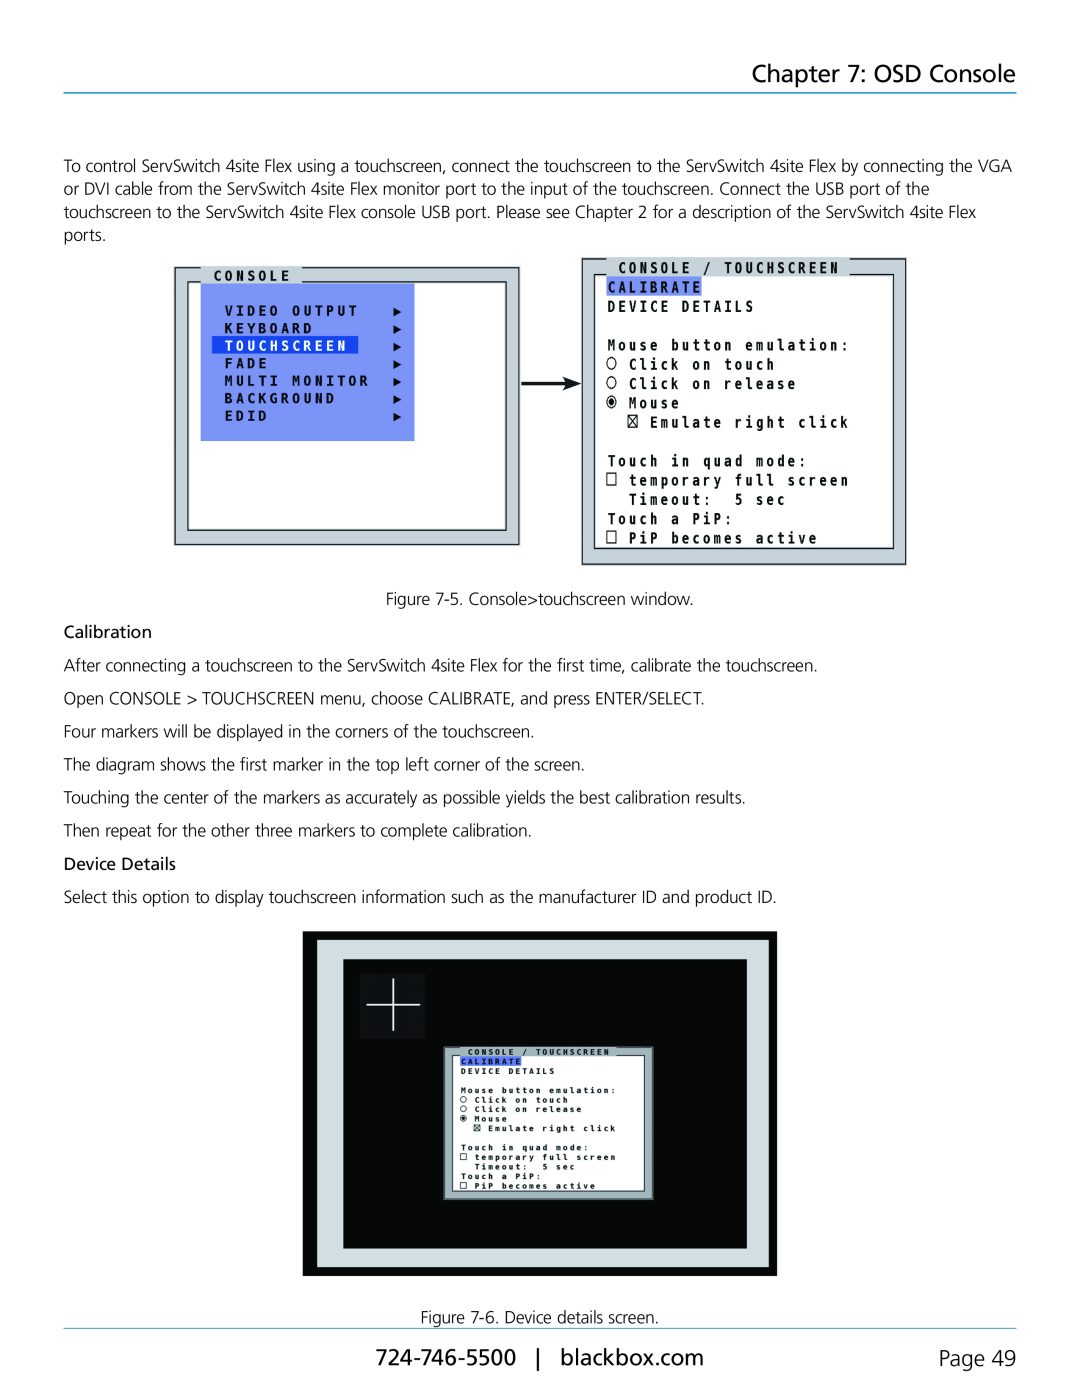 Black Box servswitch 4site flex, KVP40004A manual OSD Console, Page, 5. Consoletouchscreen window Calibration 